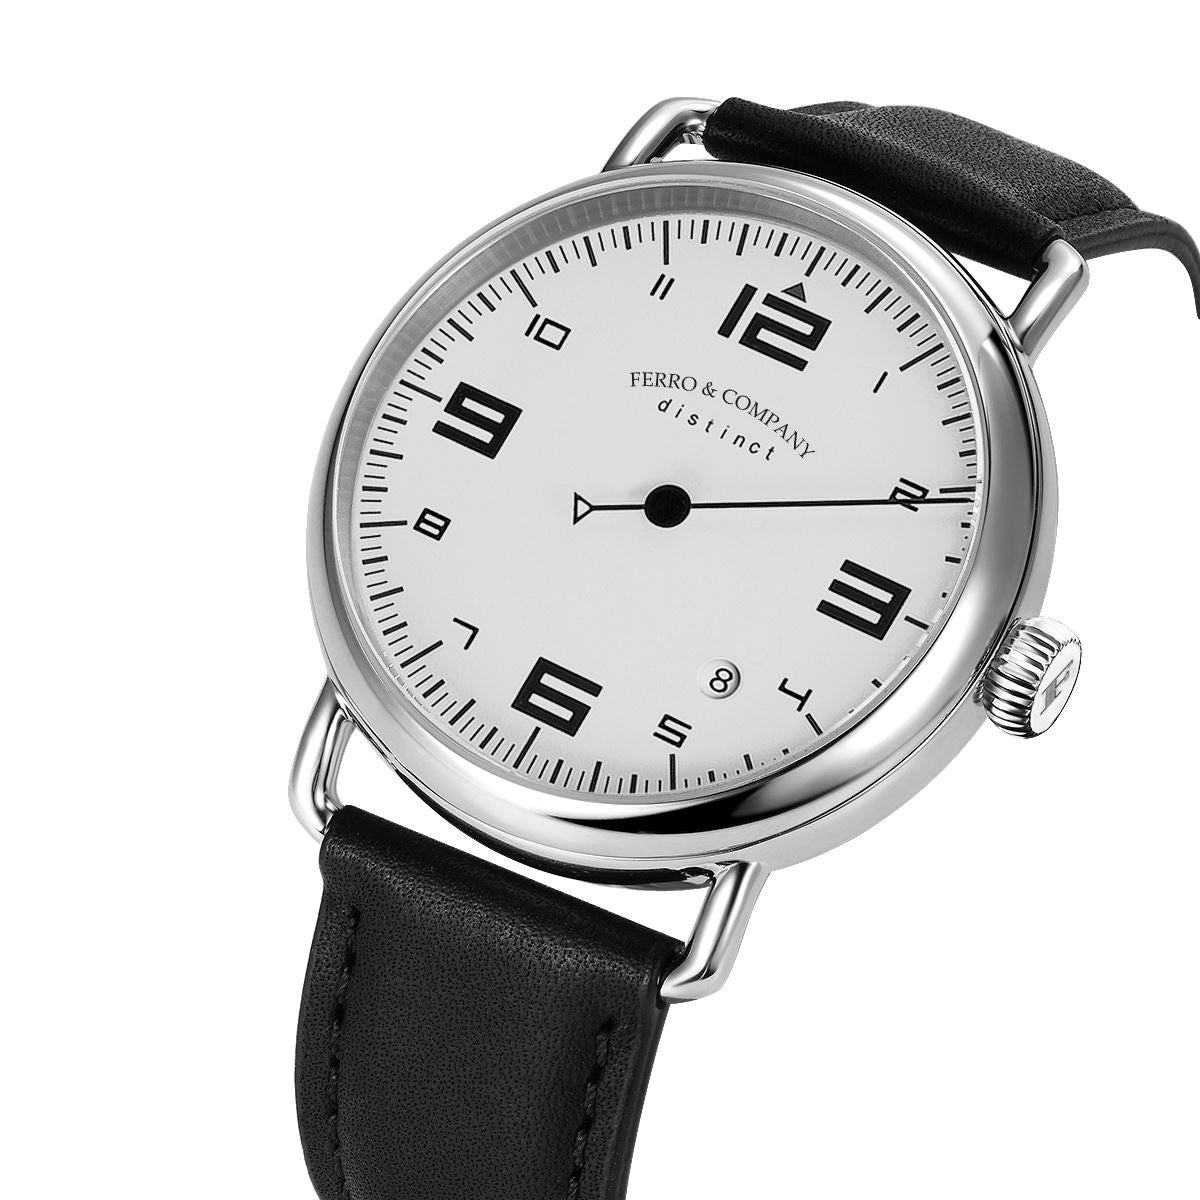 Ferro Watches Distinct 2 Vintage Style Race One Hand Watch White - Ferro &amp; Company Watches